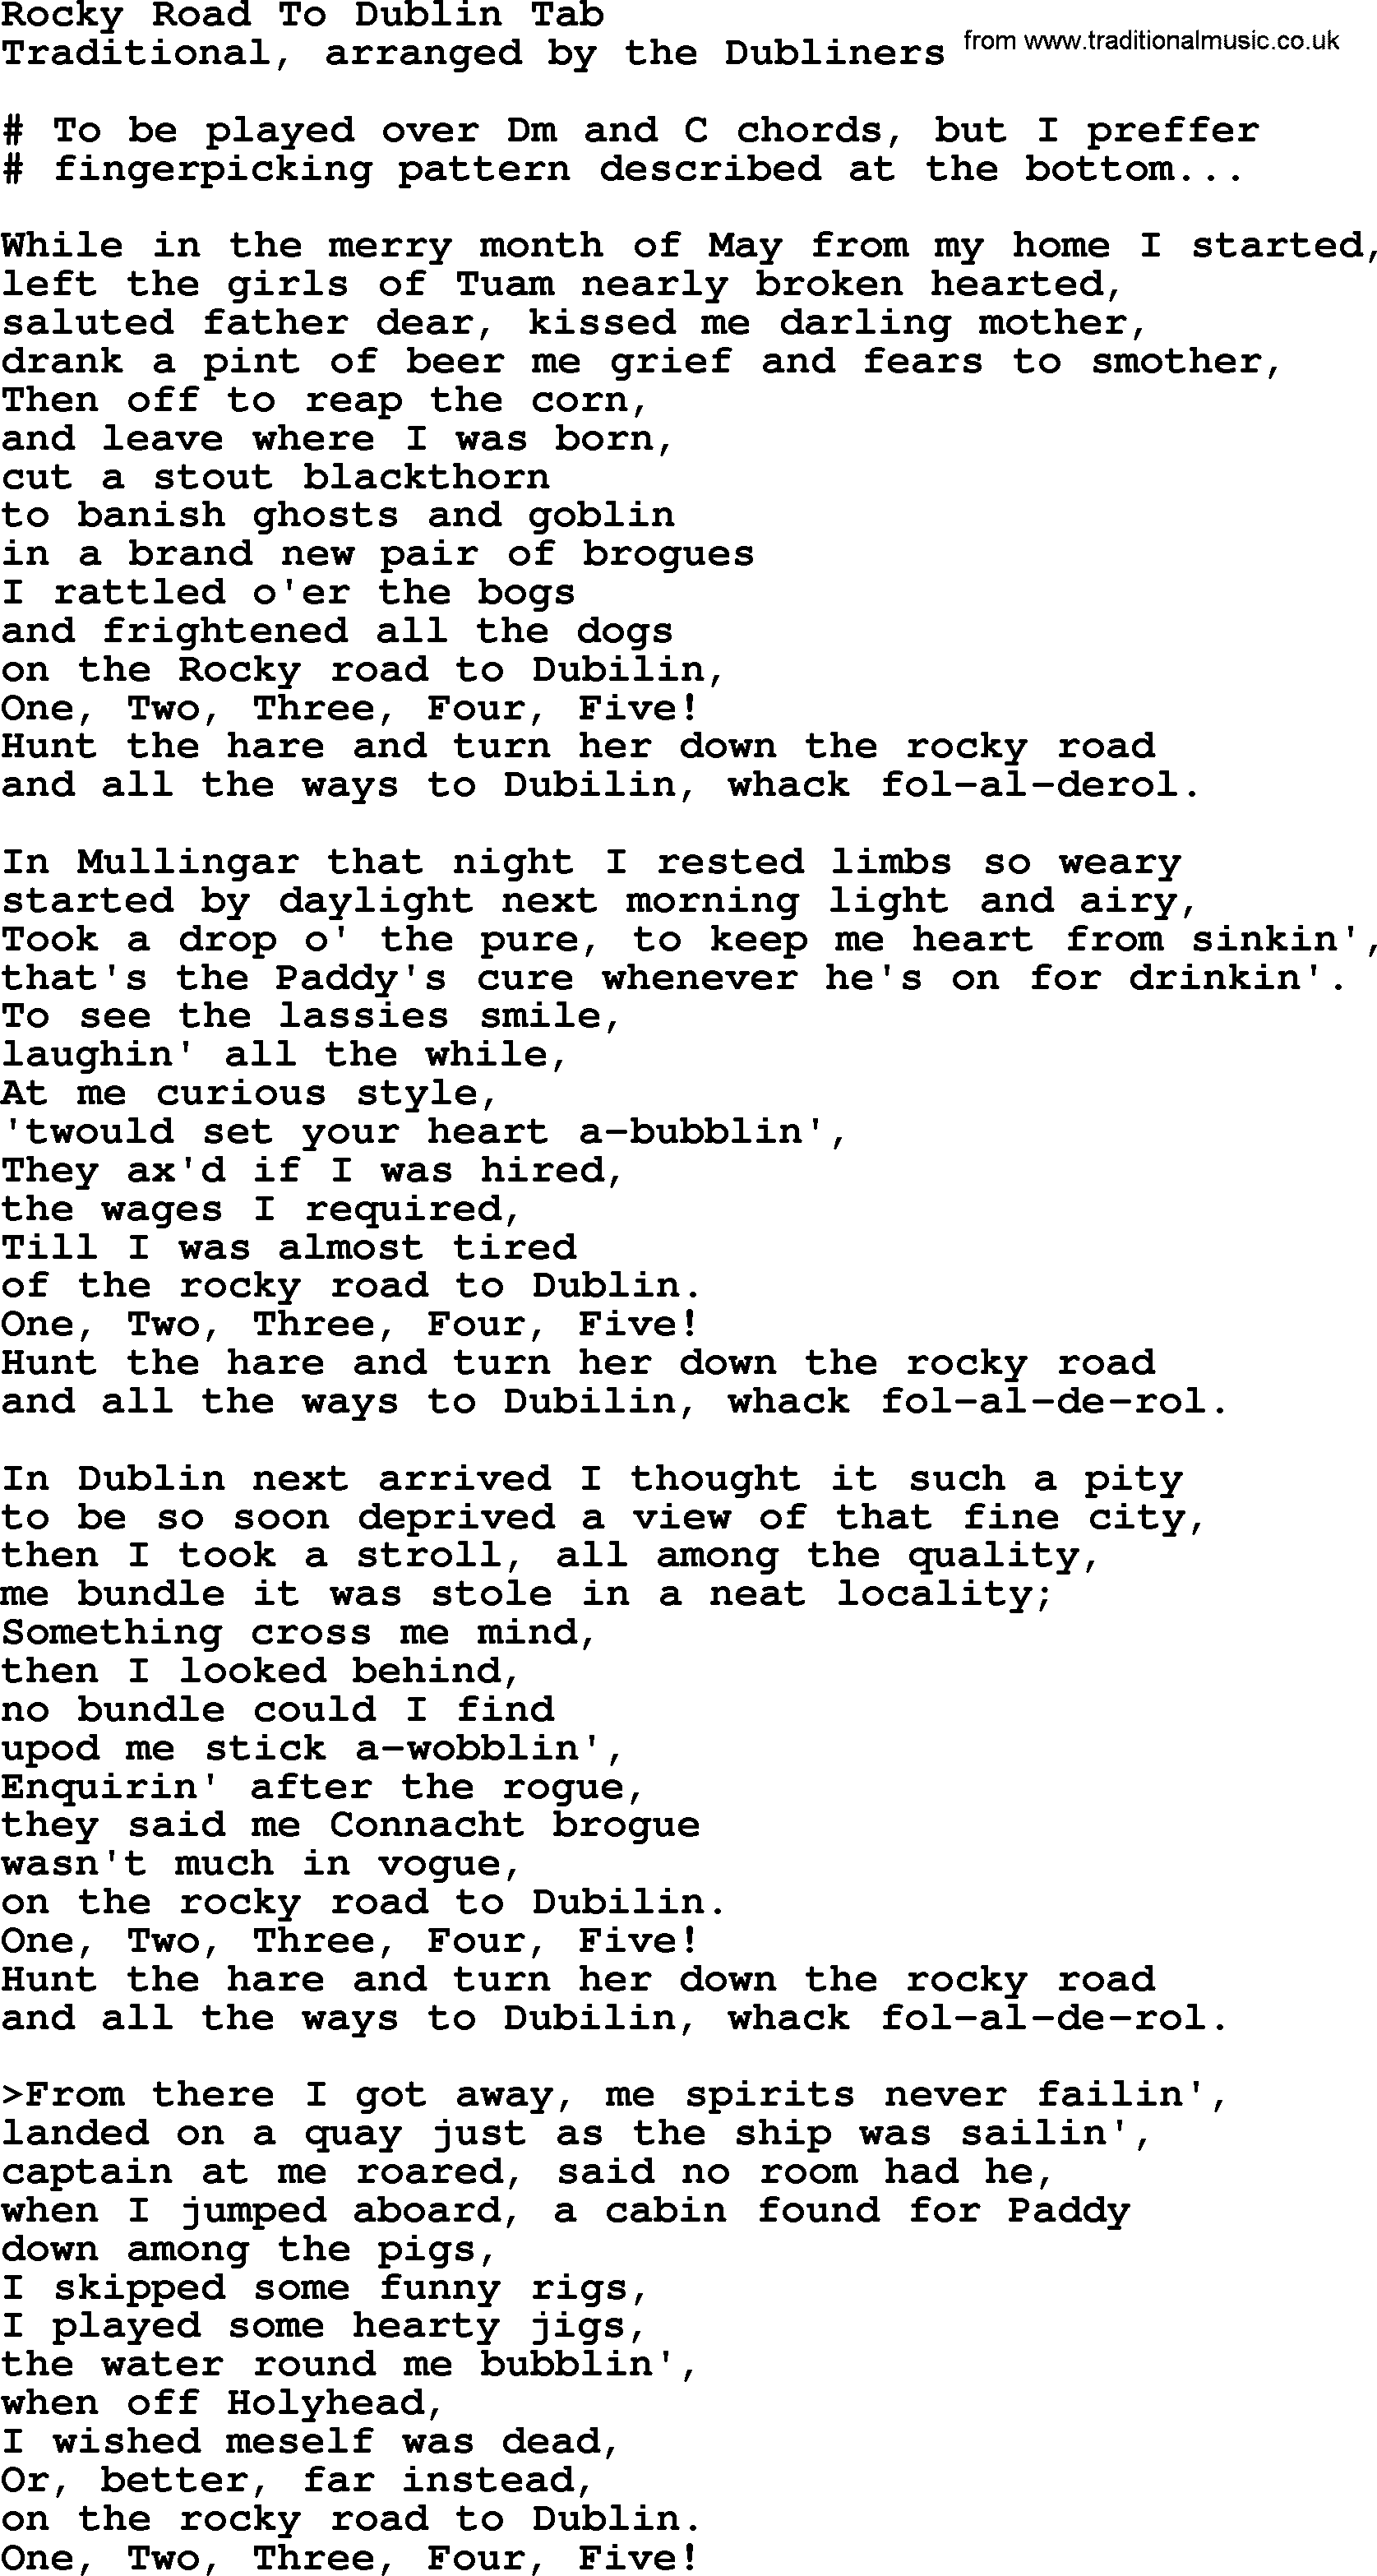 The Dubliners song: Rocky Road To Dublin Tab, lyrics